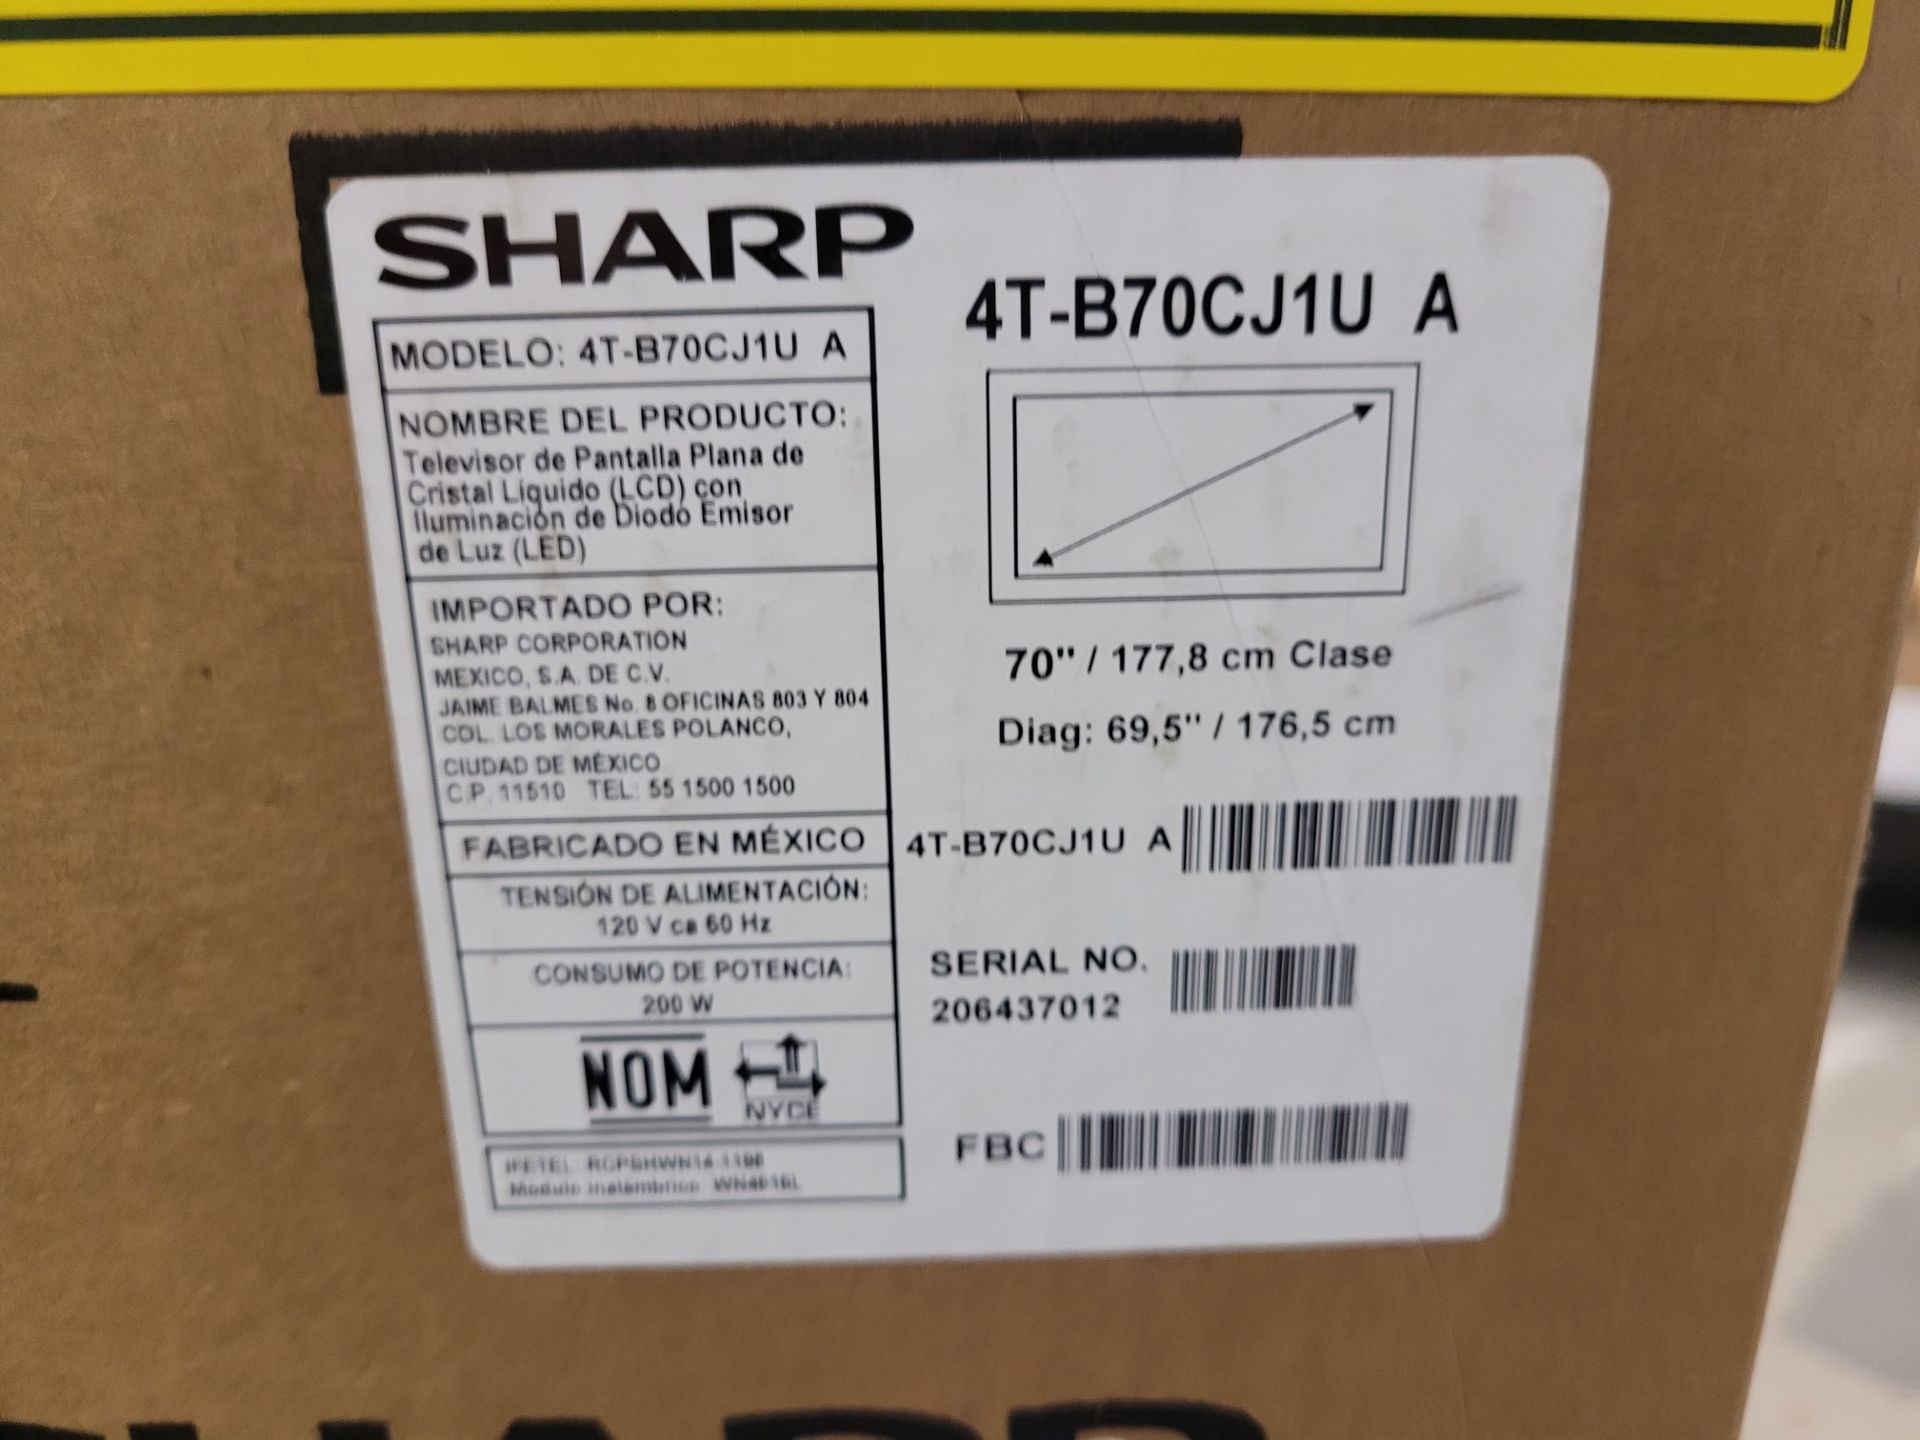 SHARP 4T-B70CJ1U A AQUOS 70" CLASS 4K ULTRA HD COMMERCIAL TV, S/N 206437012 - Image 2 of 5